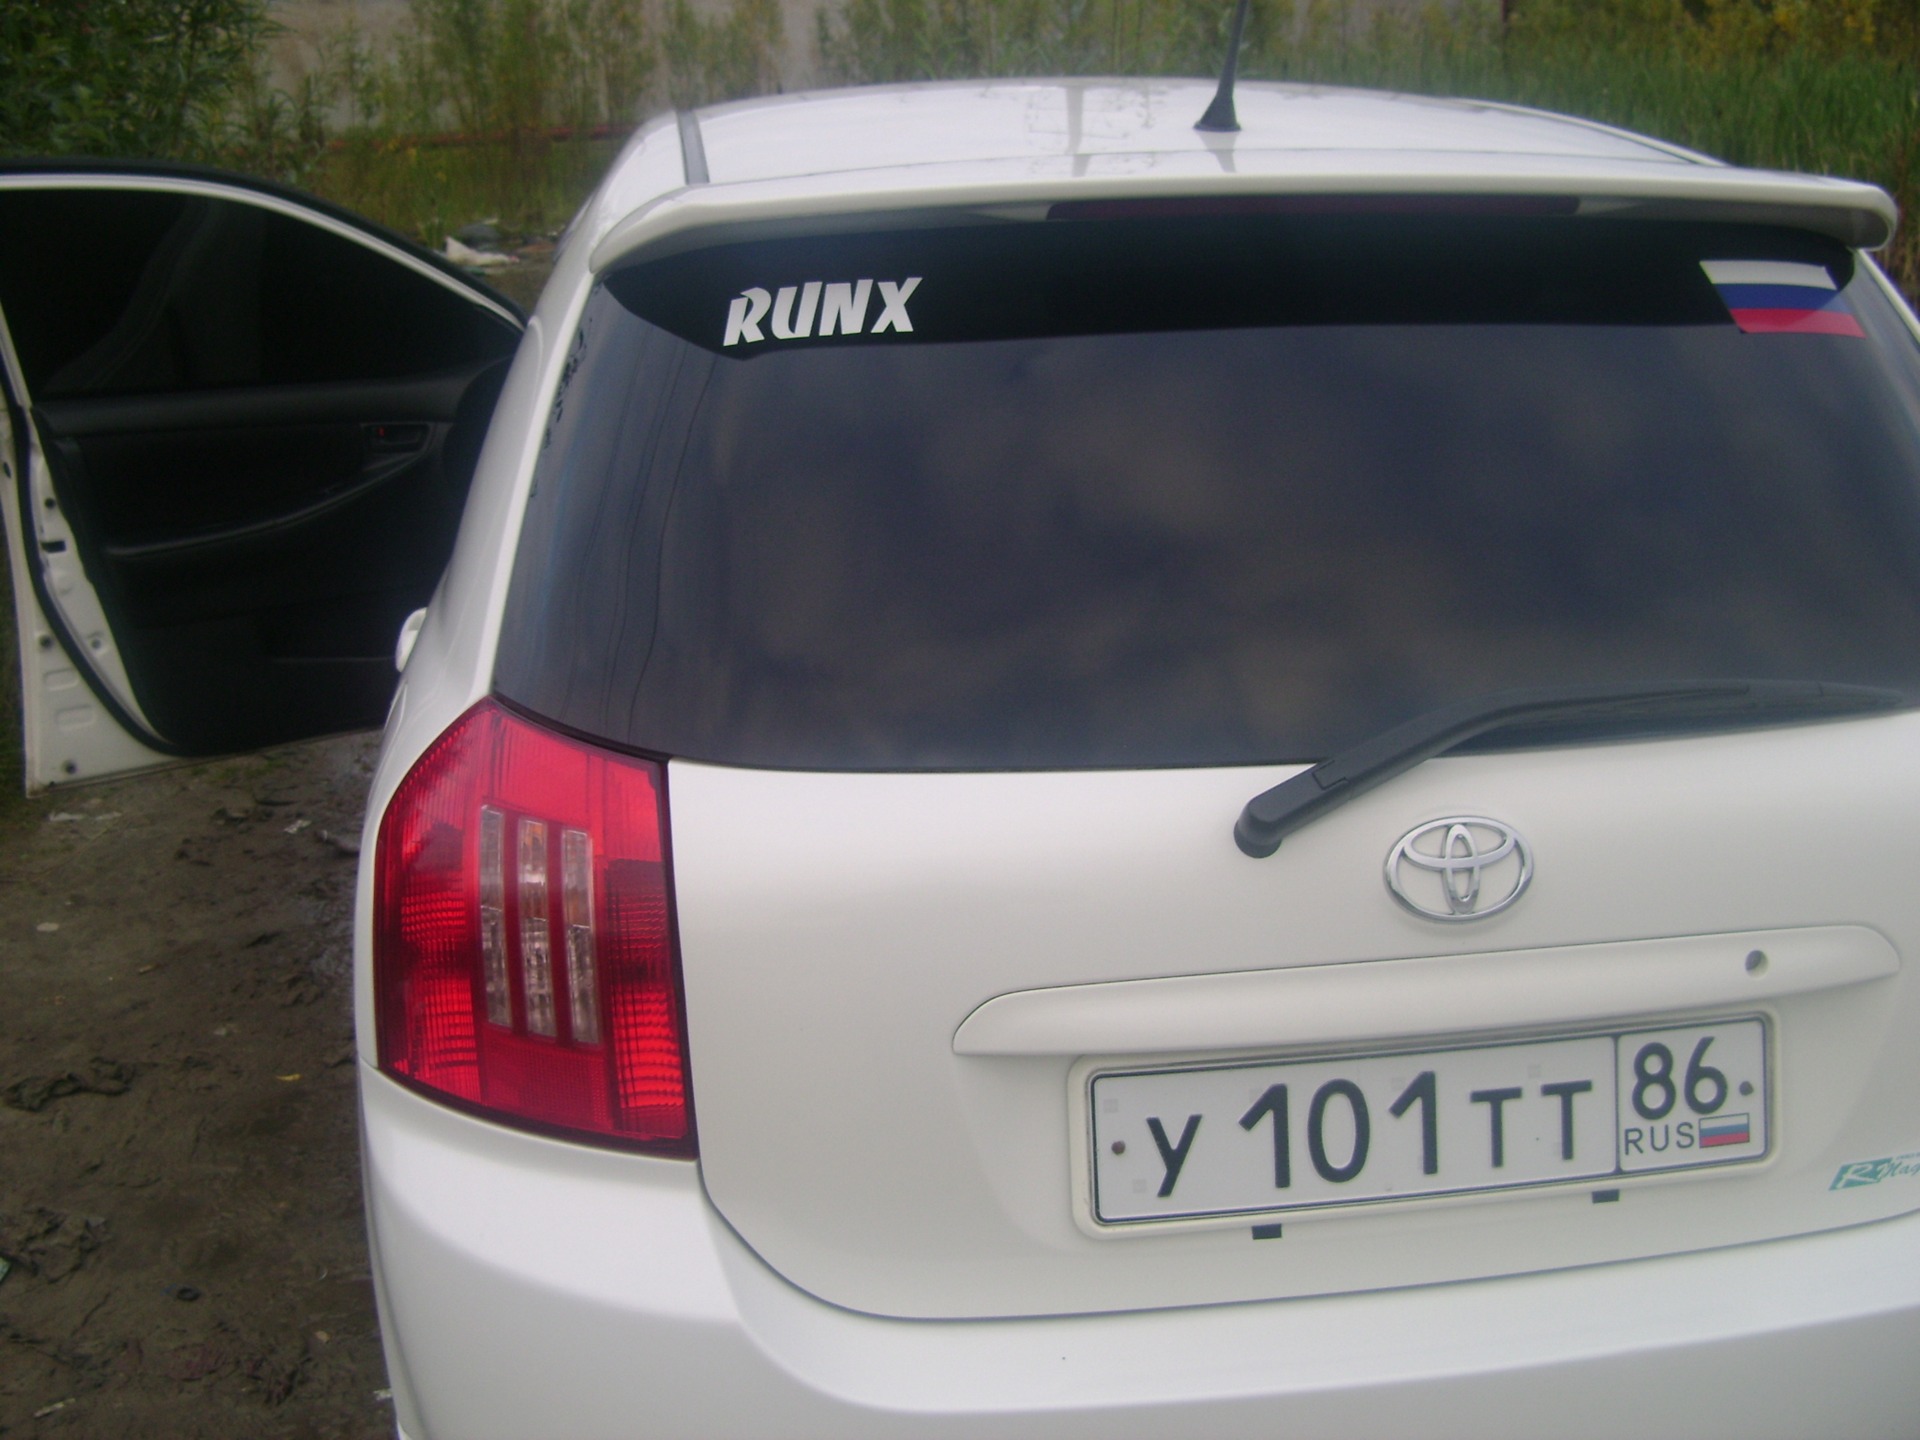    Toyota Corolla Runx 99 2003